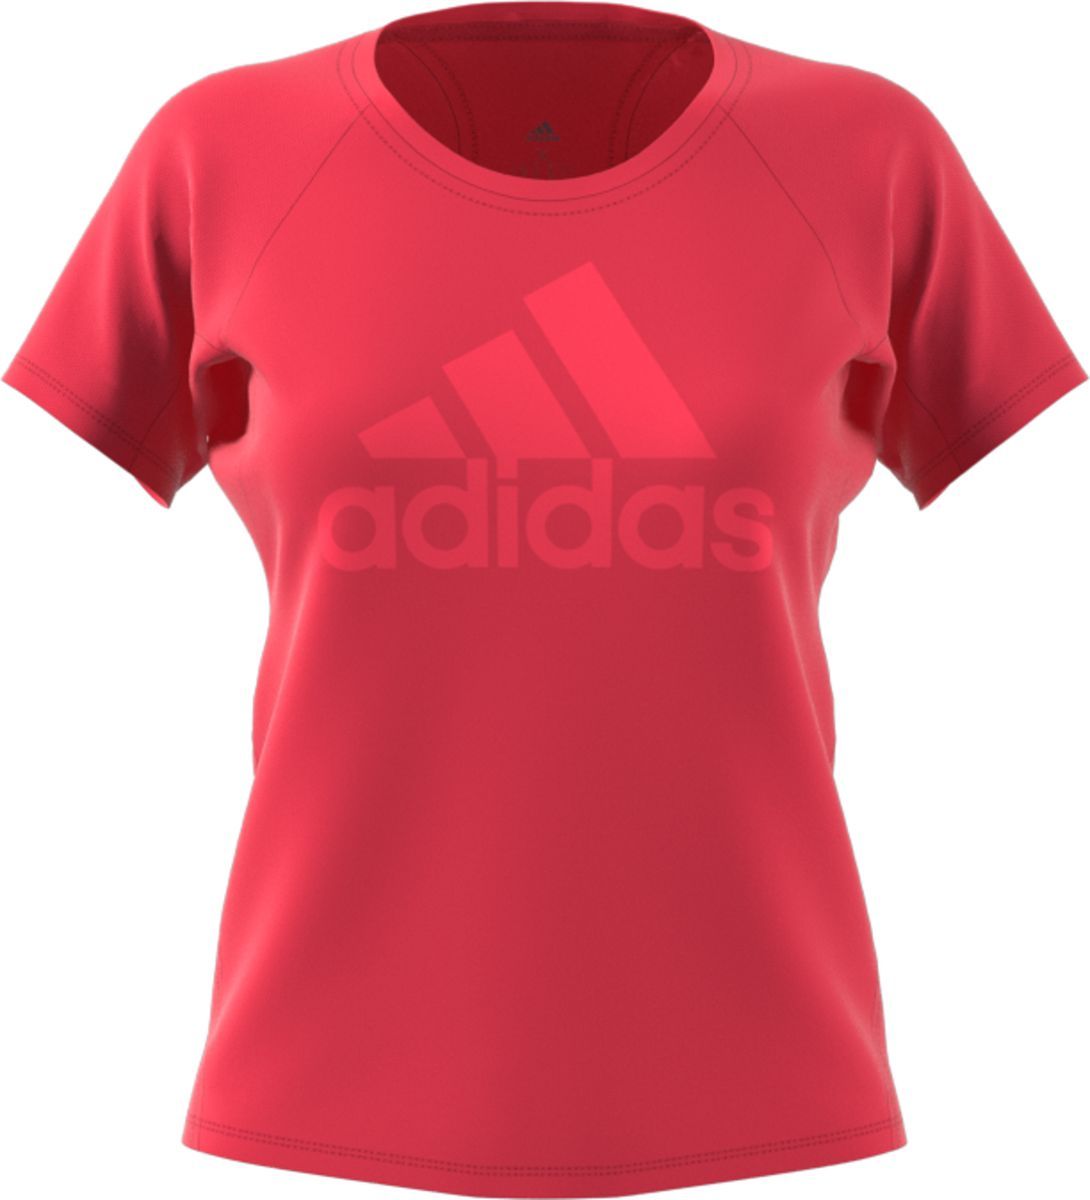   Adidas Trng Tee Logo, : . DX3710.  XL (52/54)